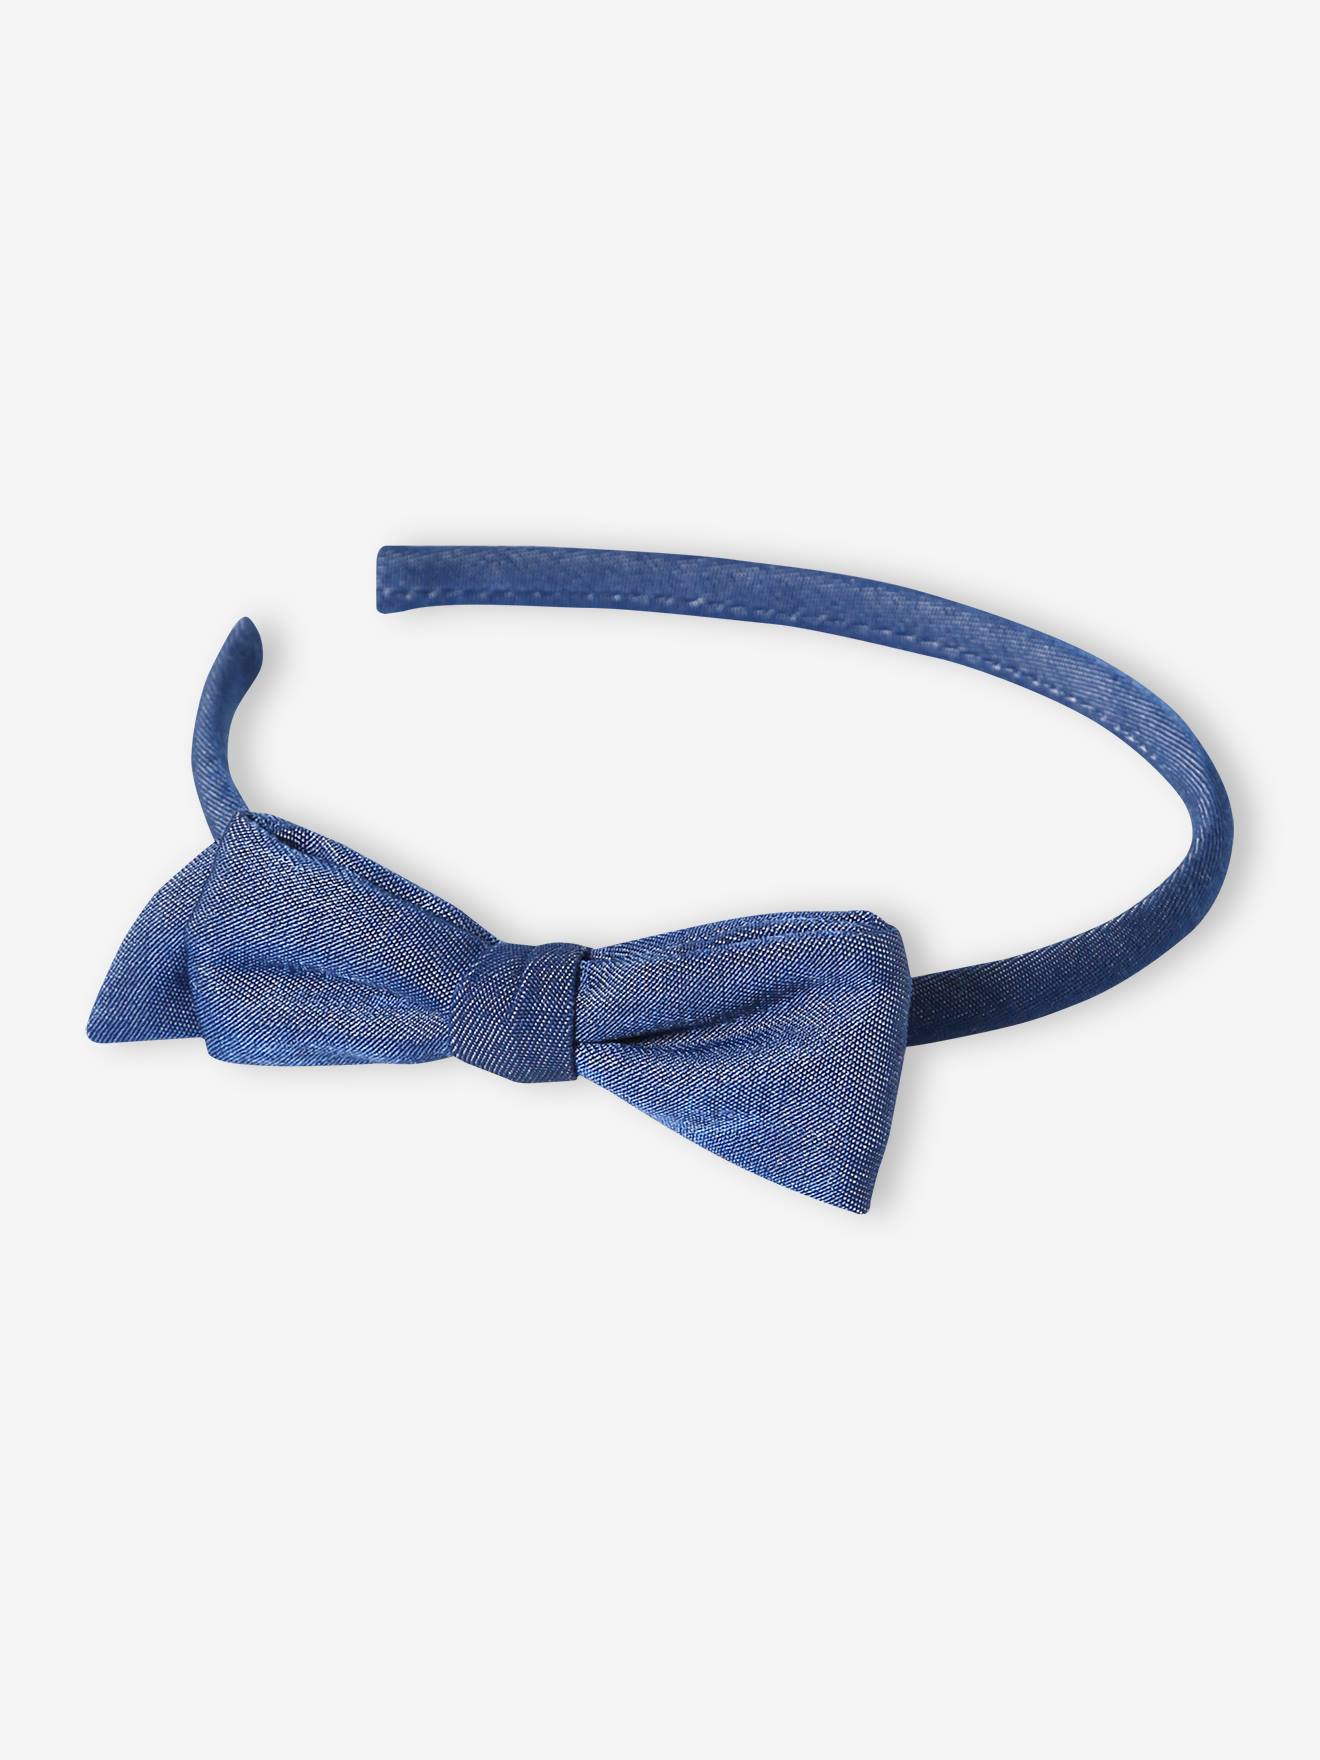 serre-tête avec noeud en tissu bleu imprimé